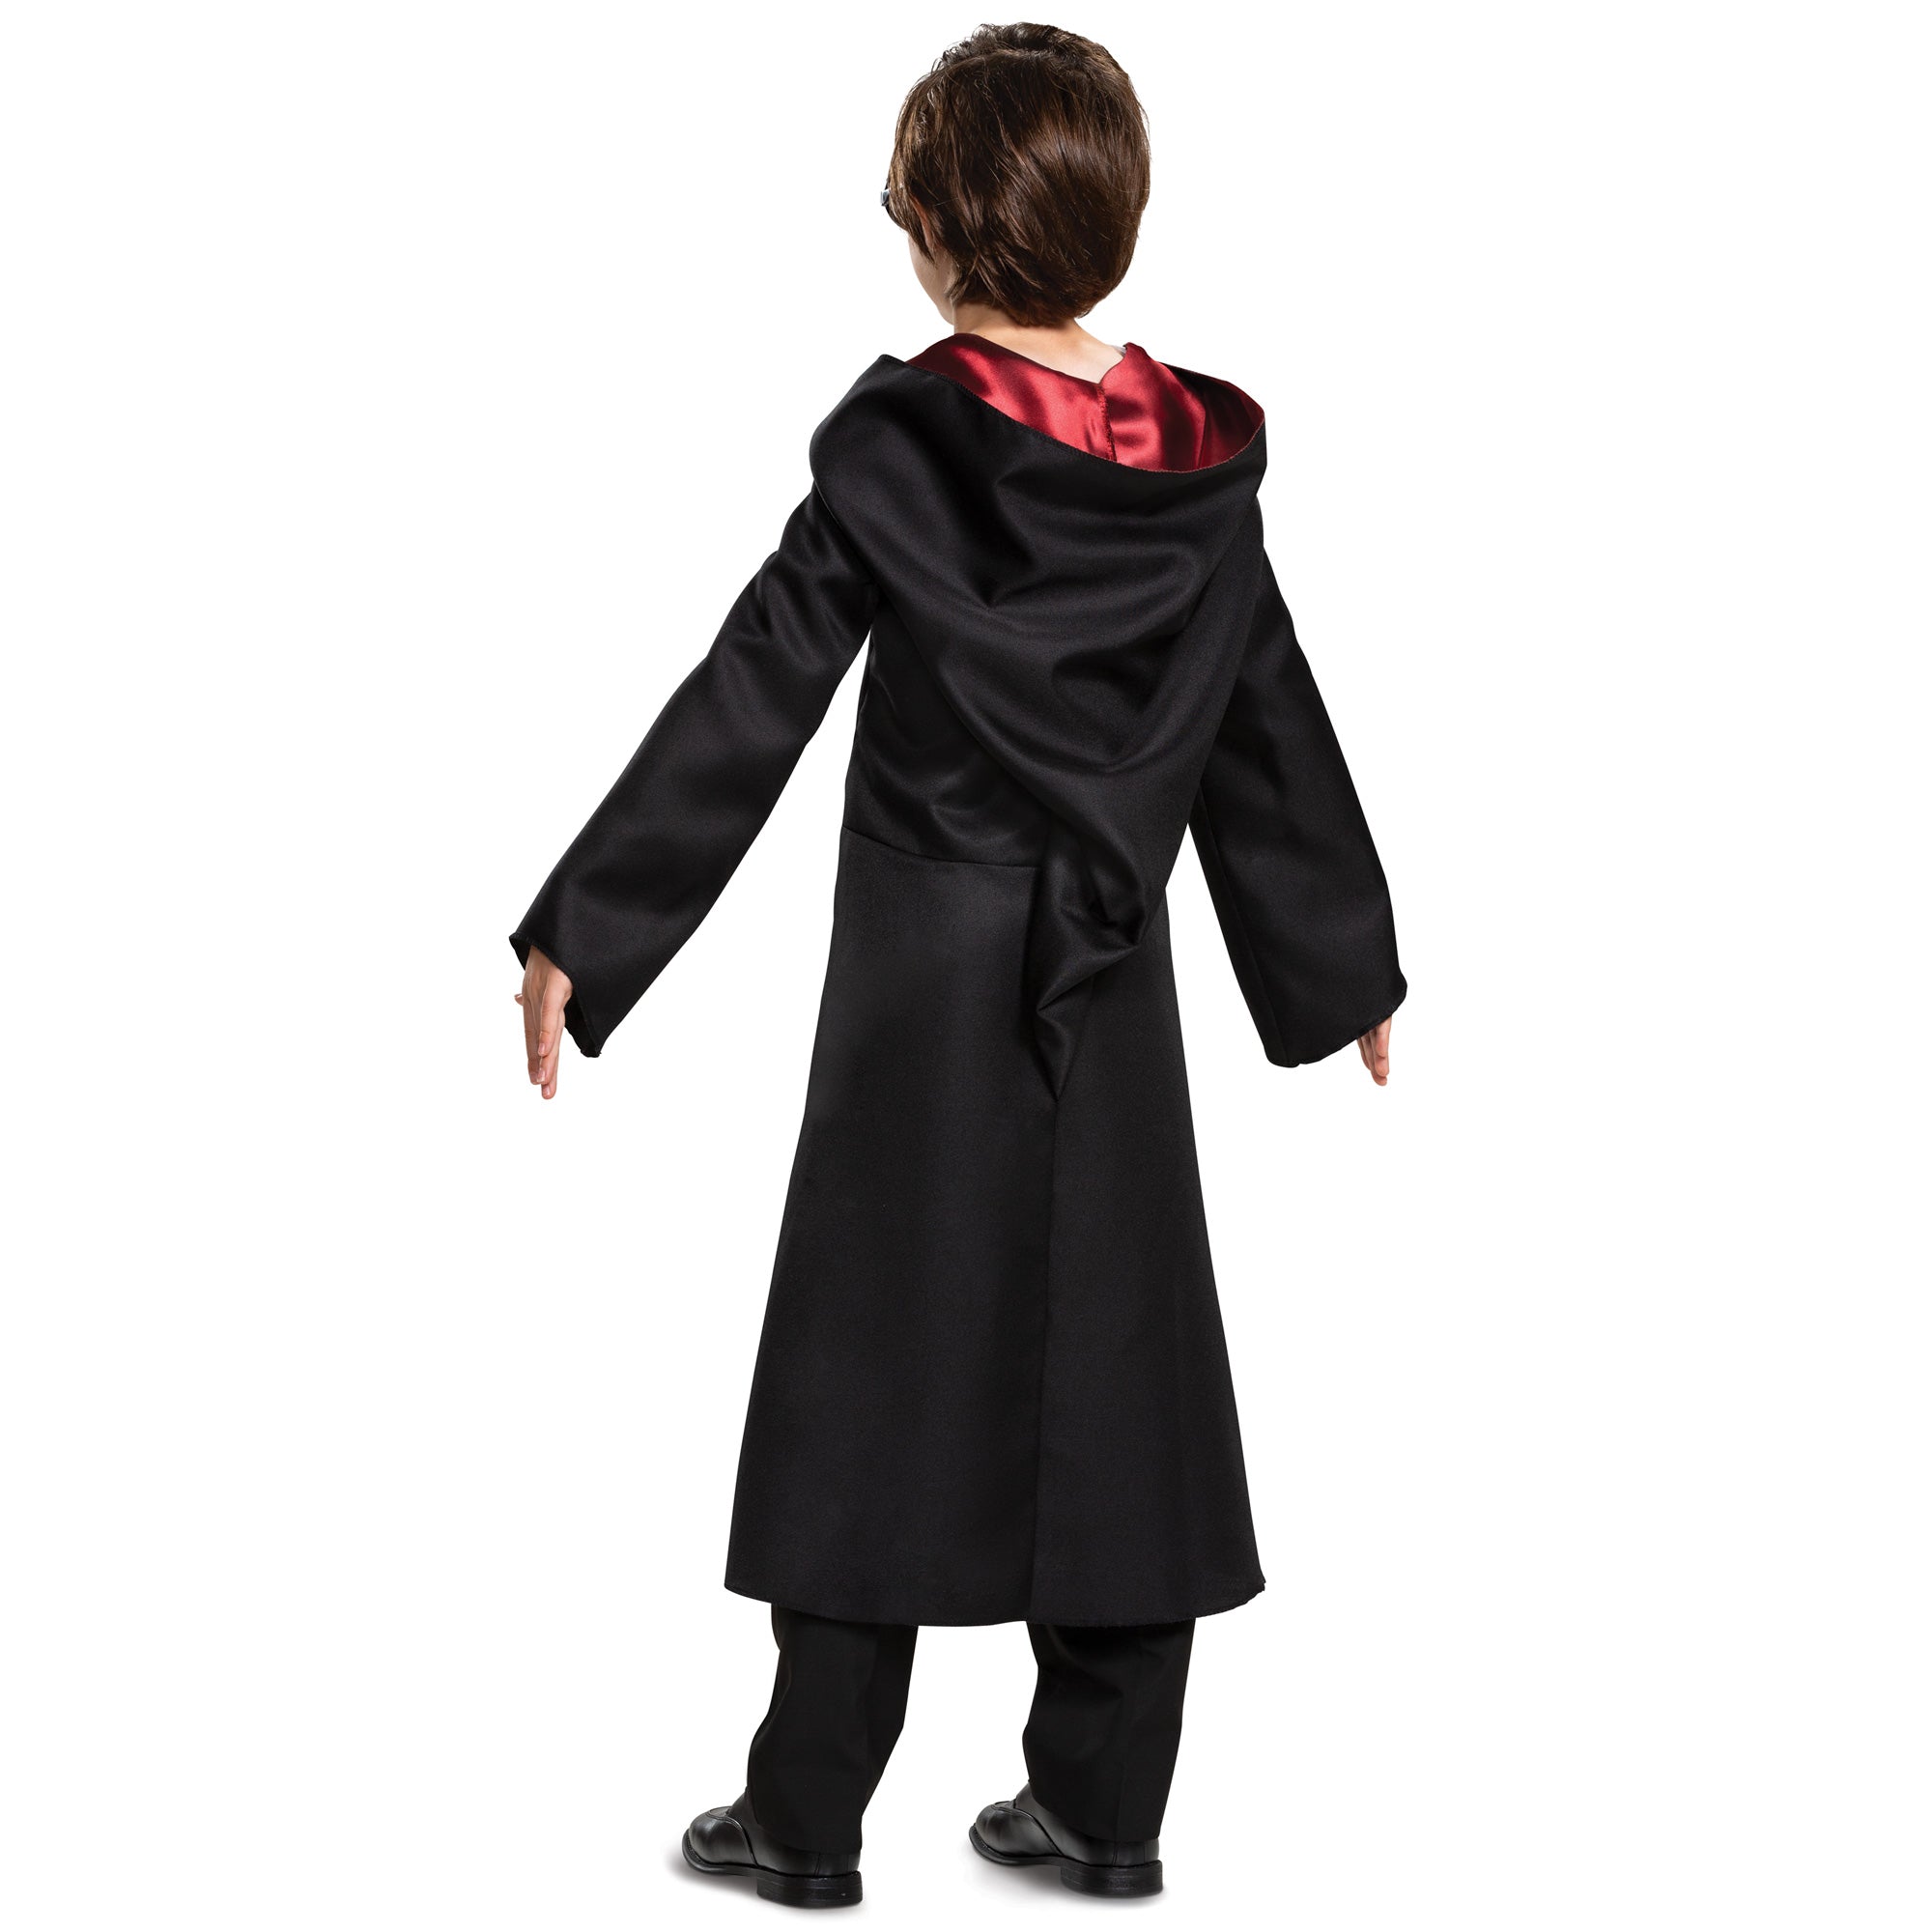 Harry Potter Hooded Cloak Cape Costume Adulte Enfants Halloween